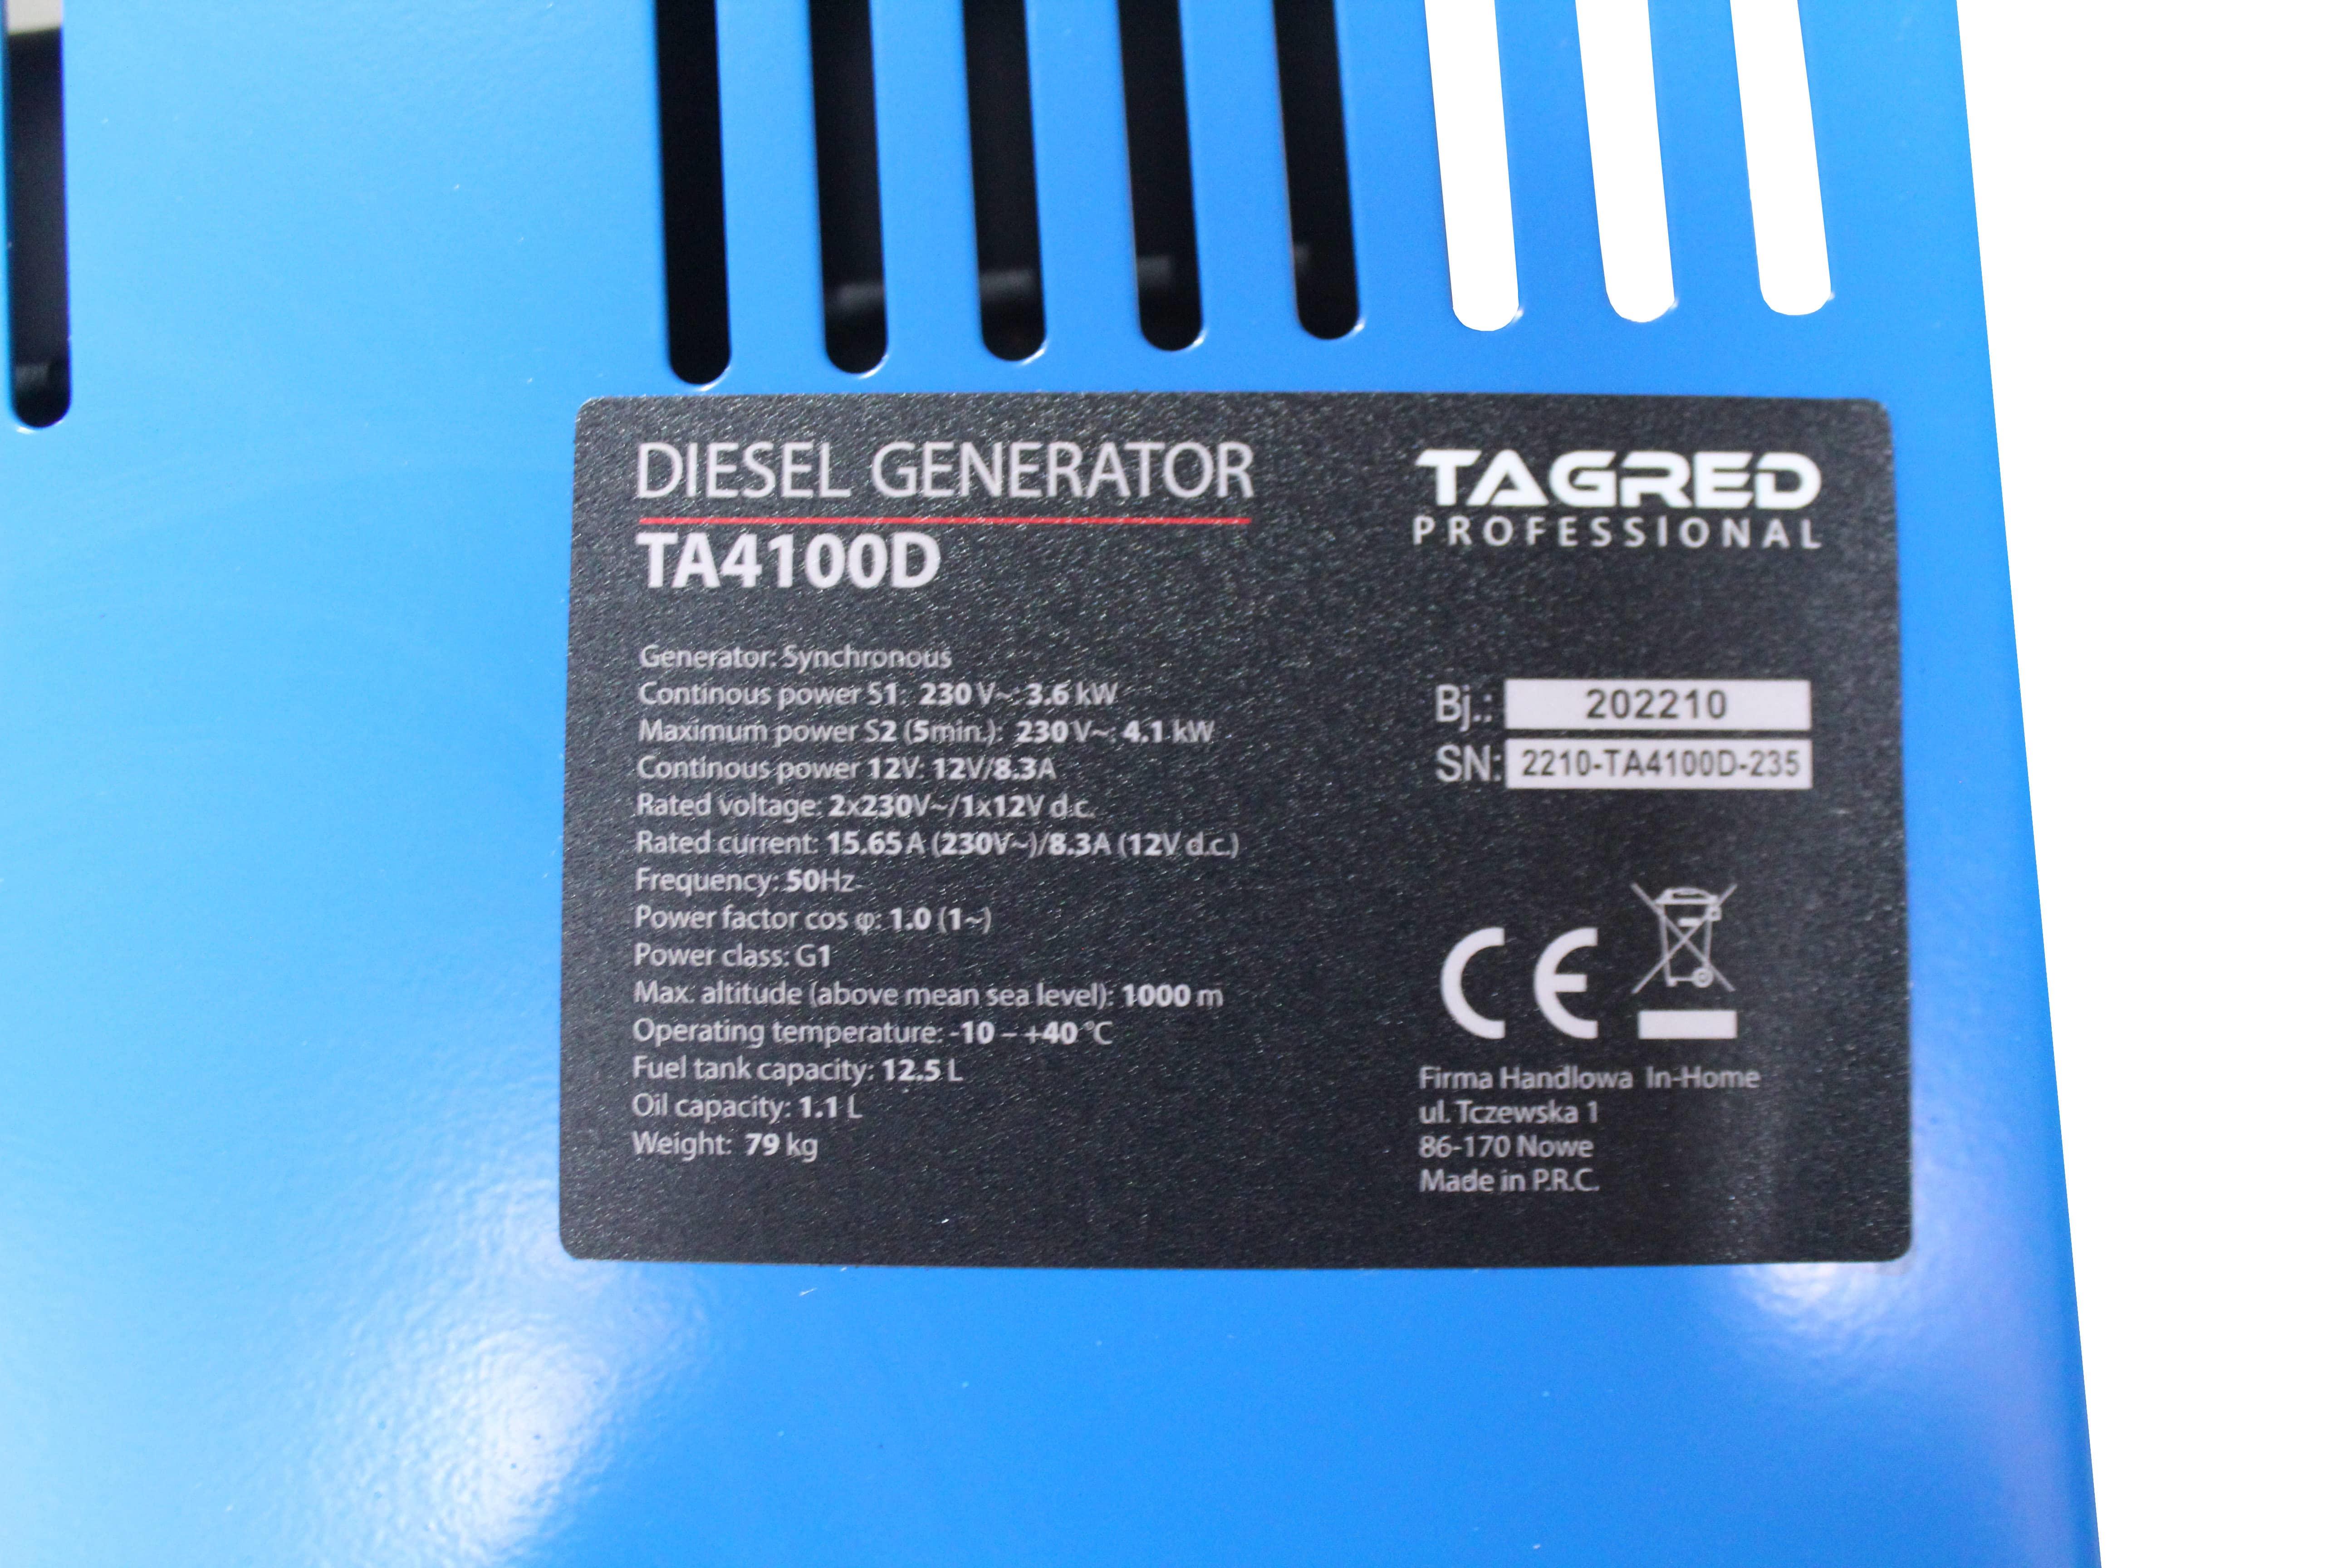 Генератор Tagred TA4100D обзор - фото 11